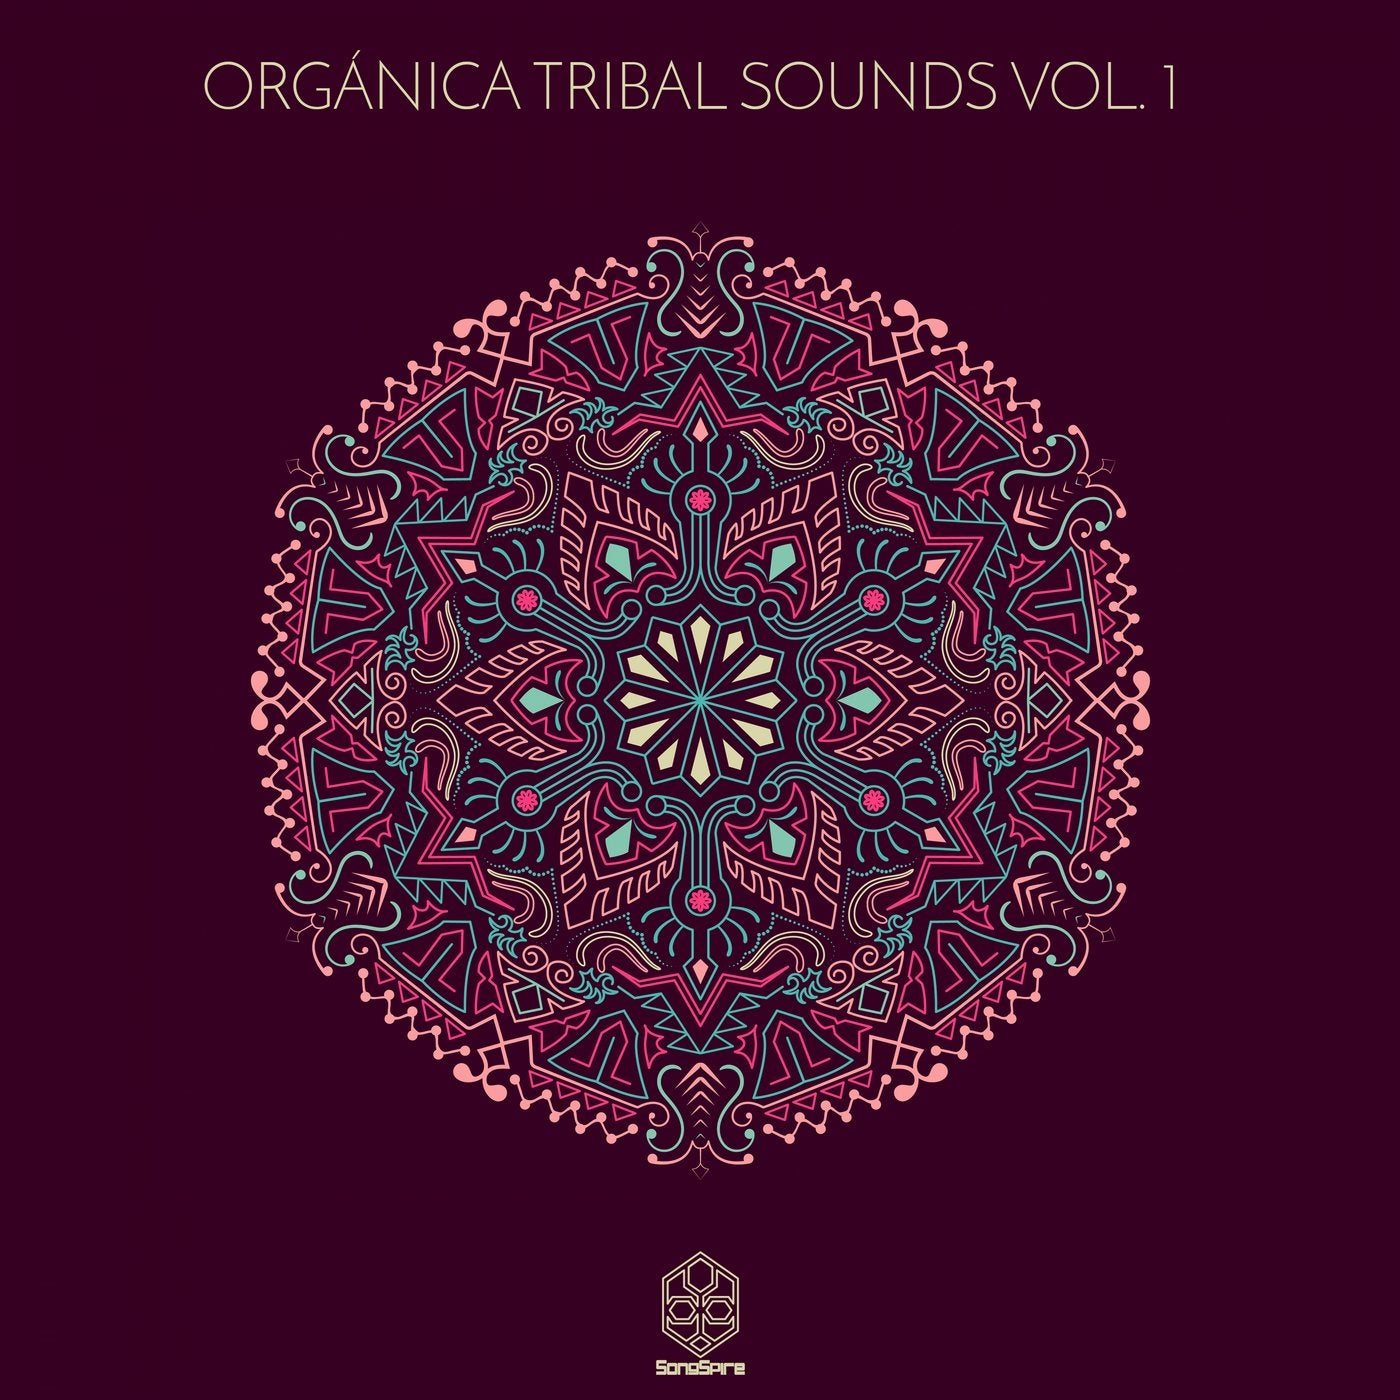 Organica Tribal Sounds Vol. 1